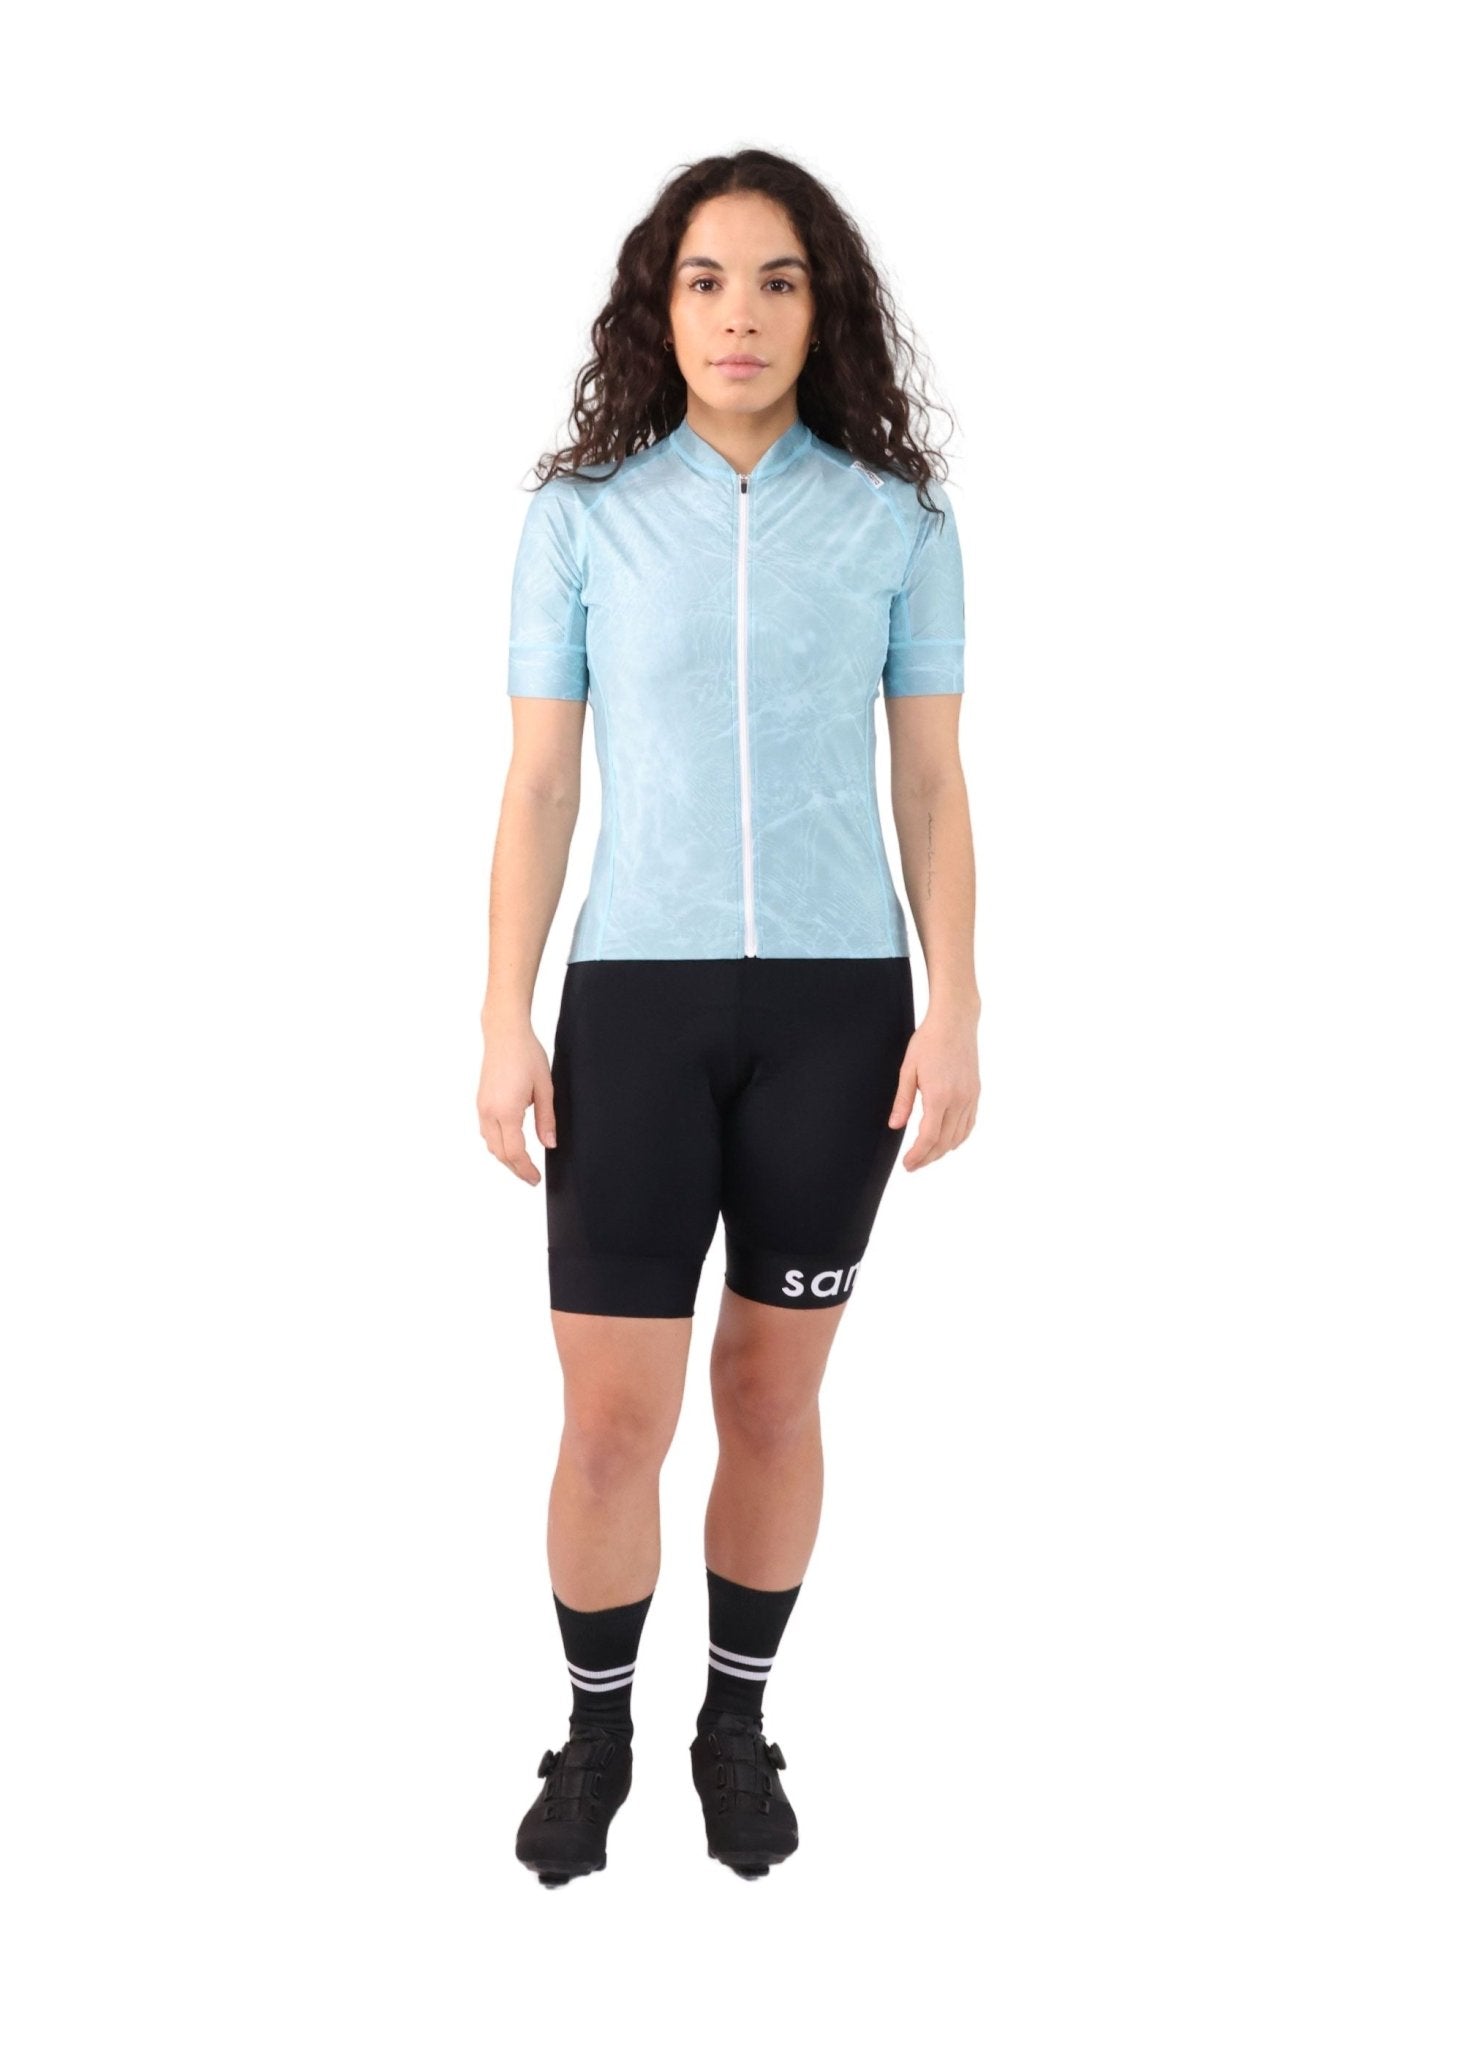 Performance Jersey - Ocean - Samsara Cycle-Short Sleeve Jerseys